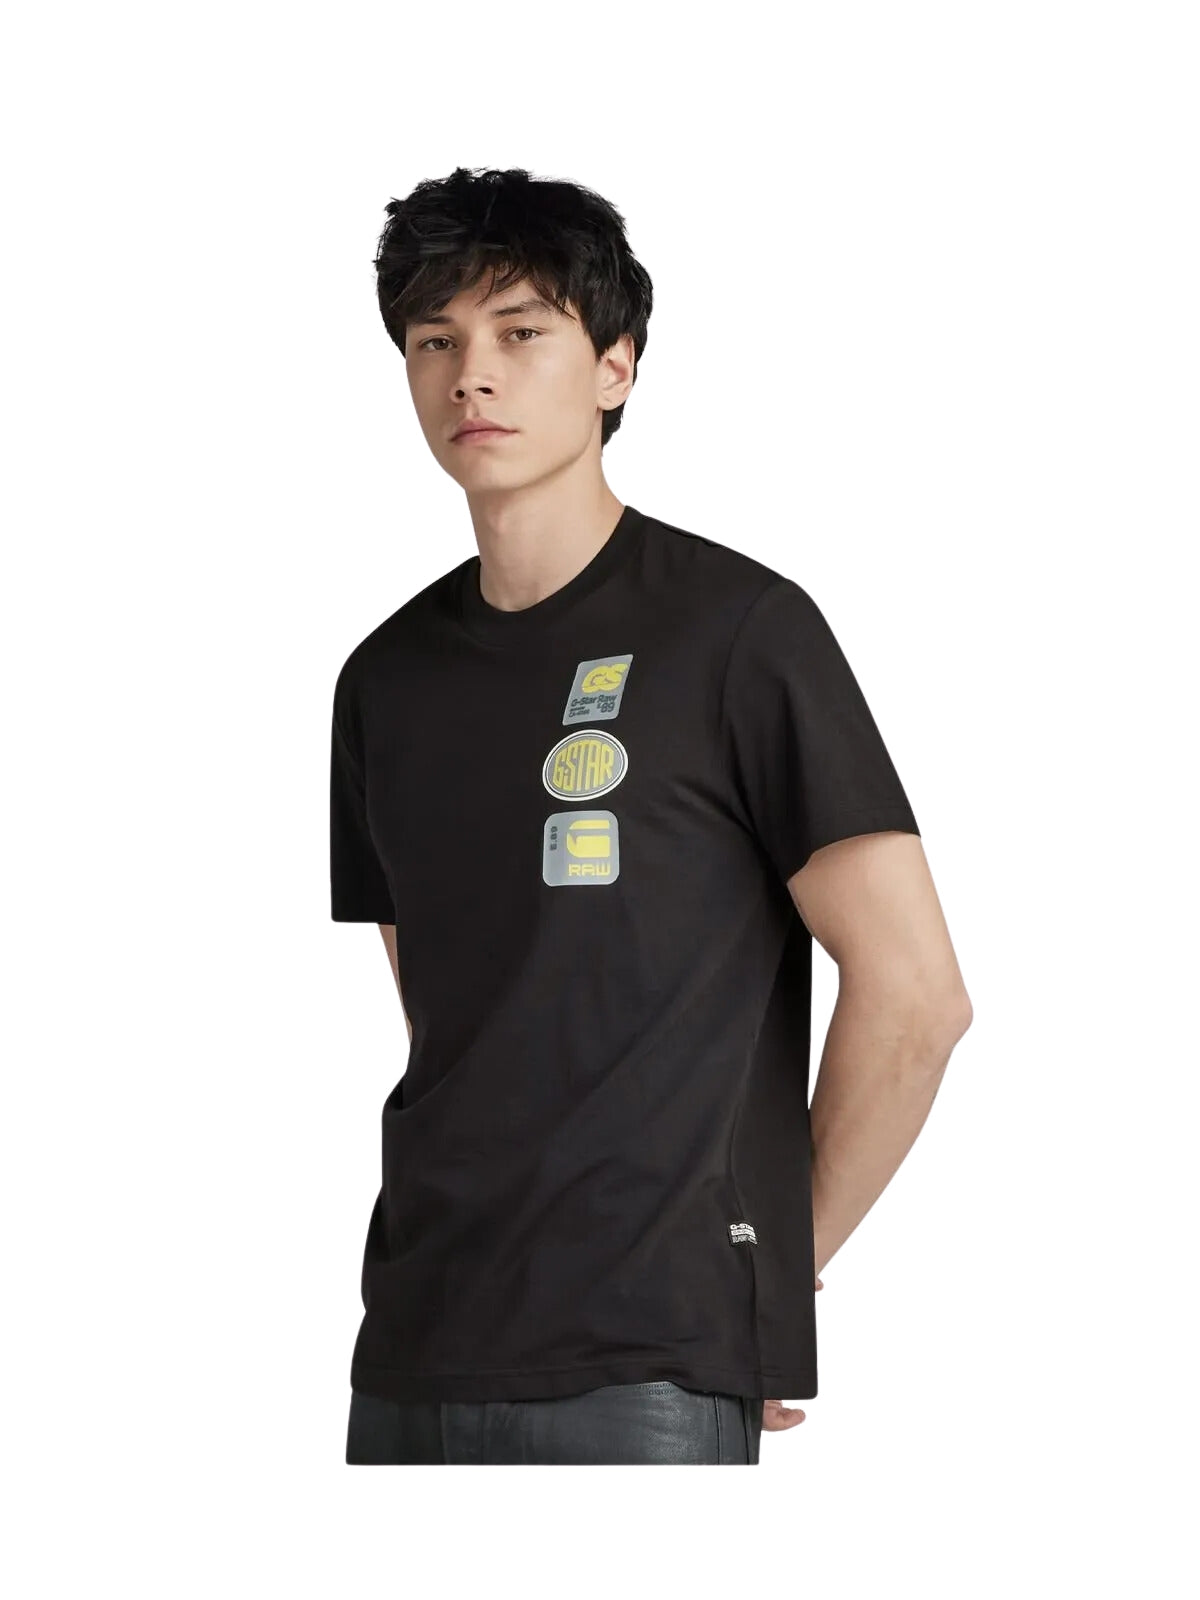 G-Star T-Shirt Multi Badge Dk Black